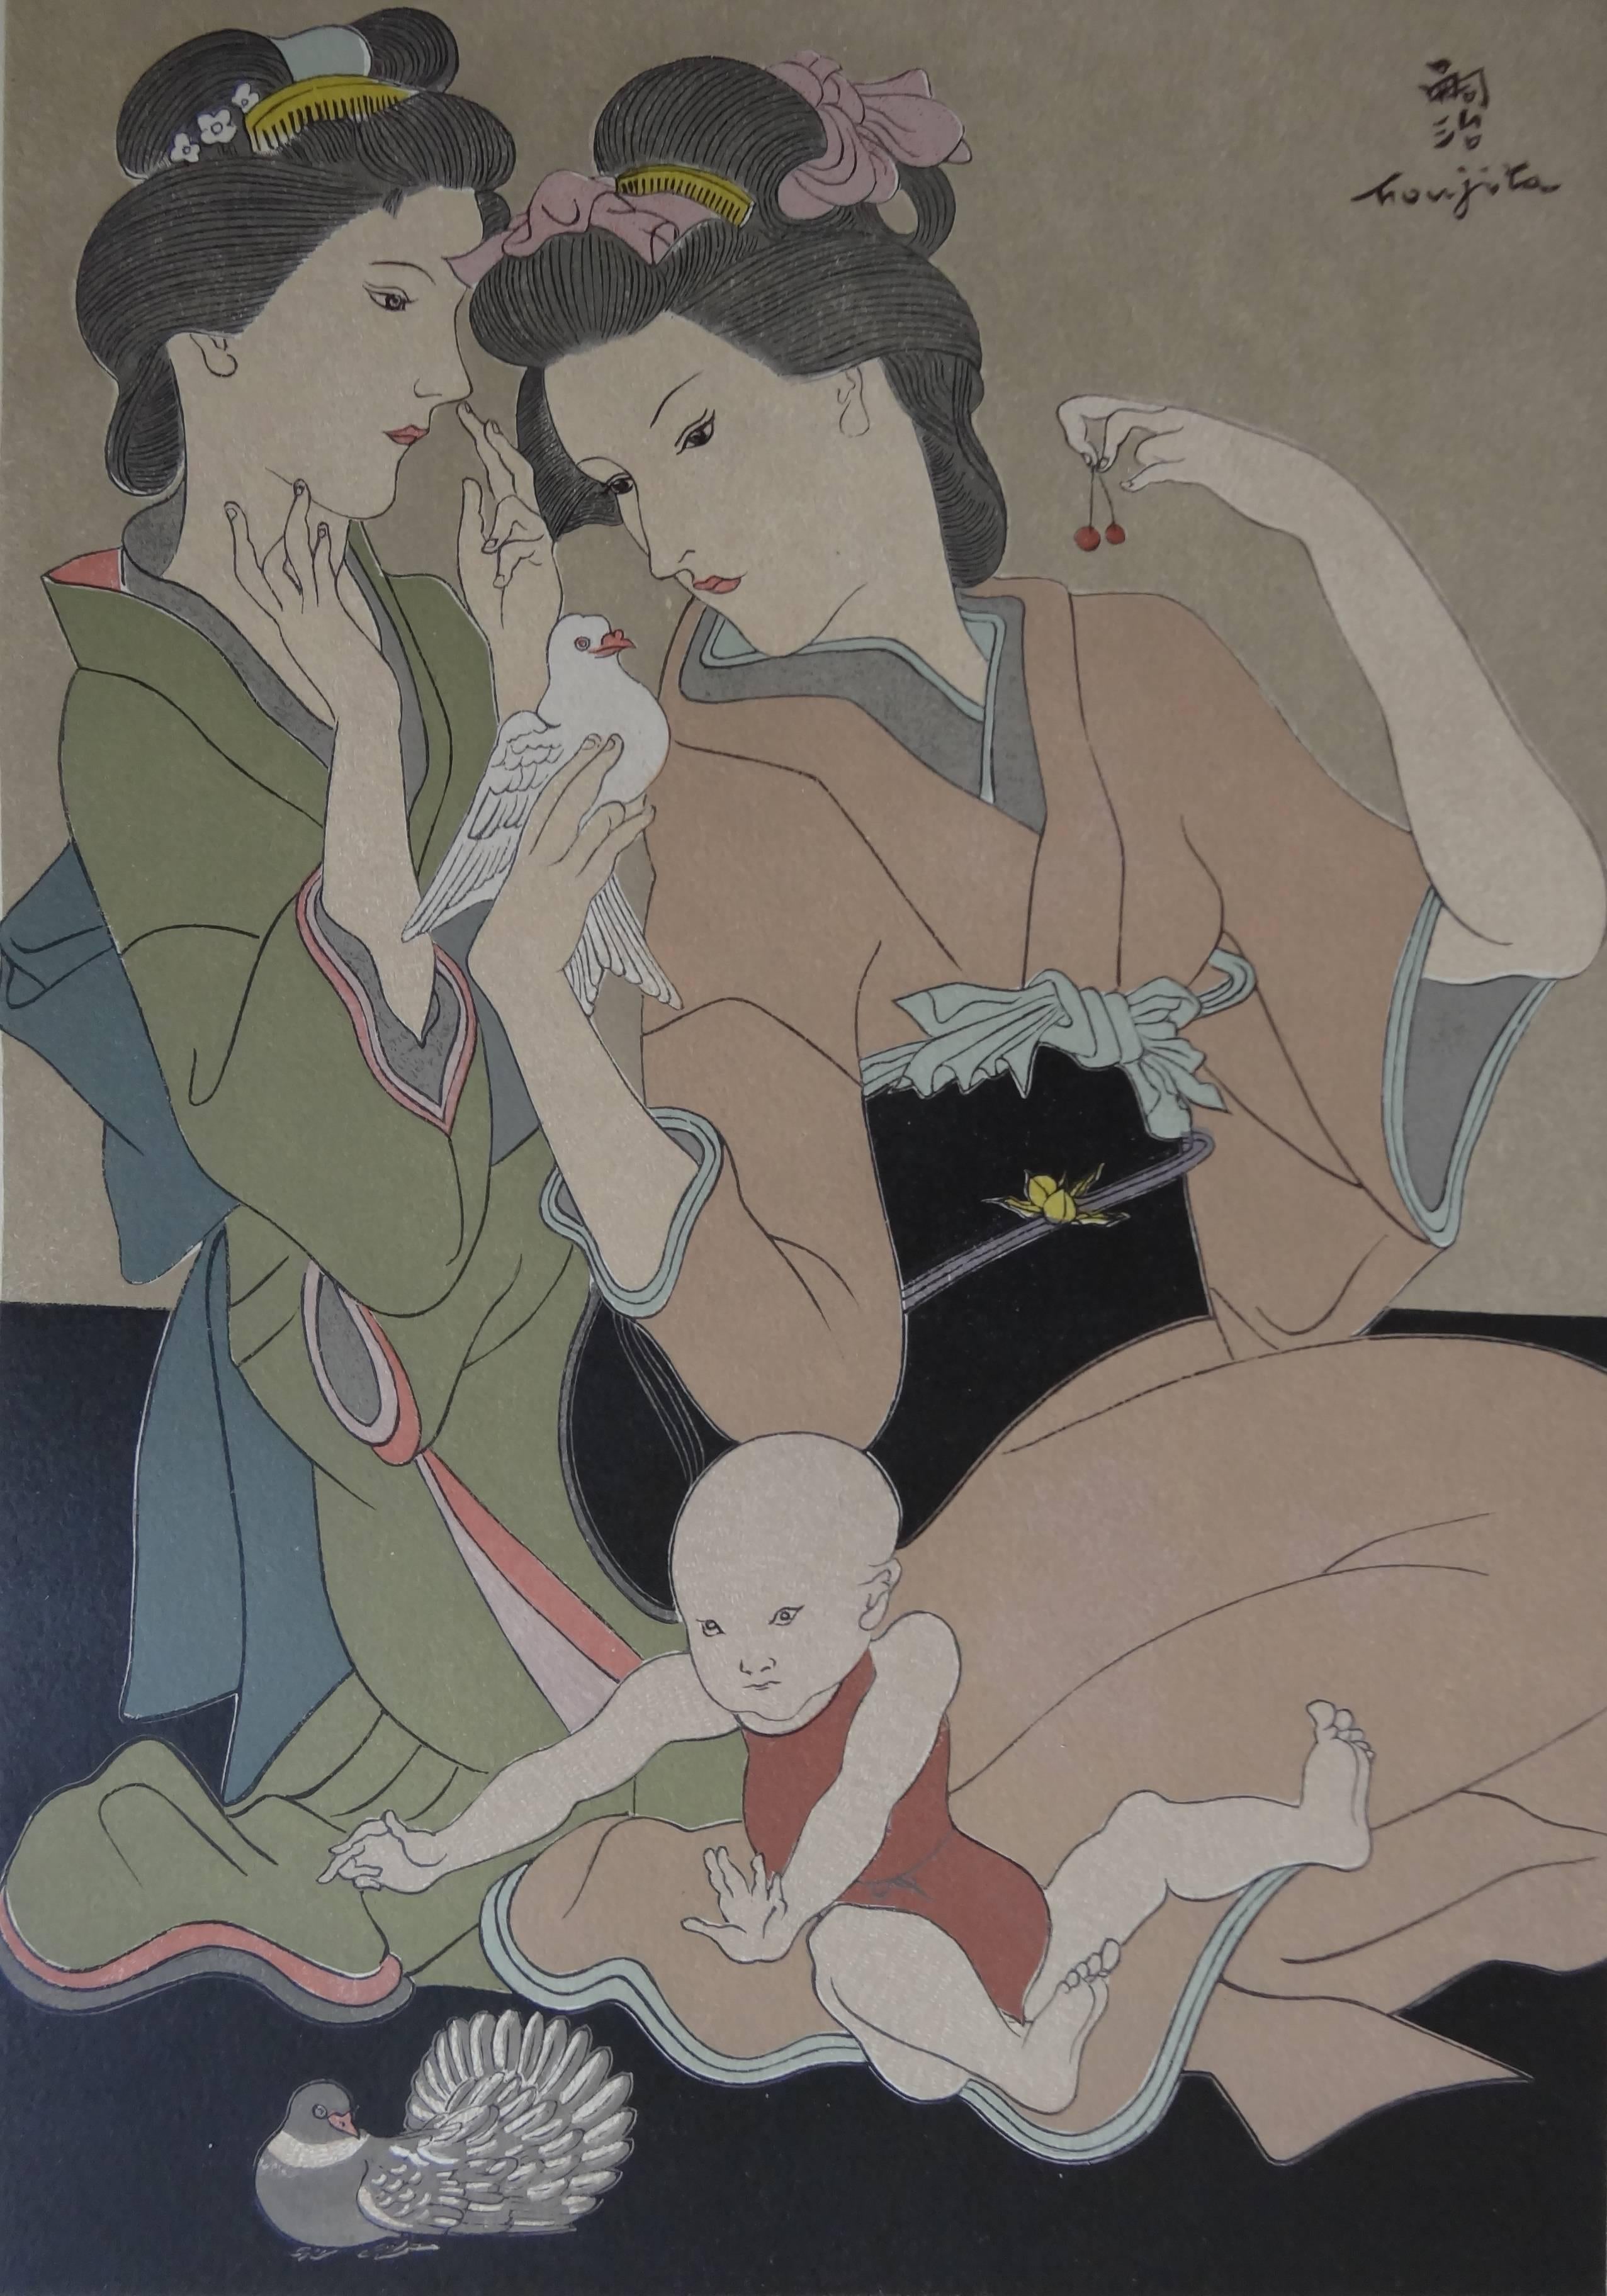 Tsuguharu Leonard Foujita Figurative Print - Japanese Geishas with a Dove - Original signed woodcut - 1932